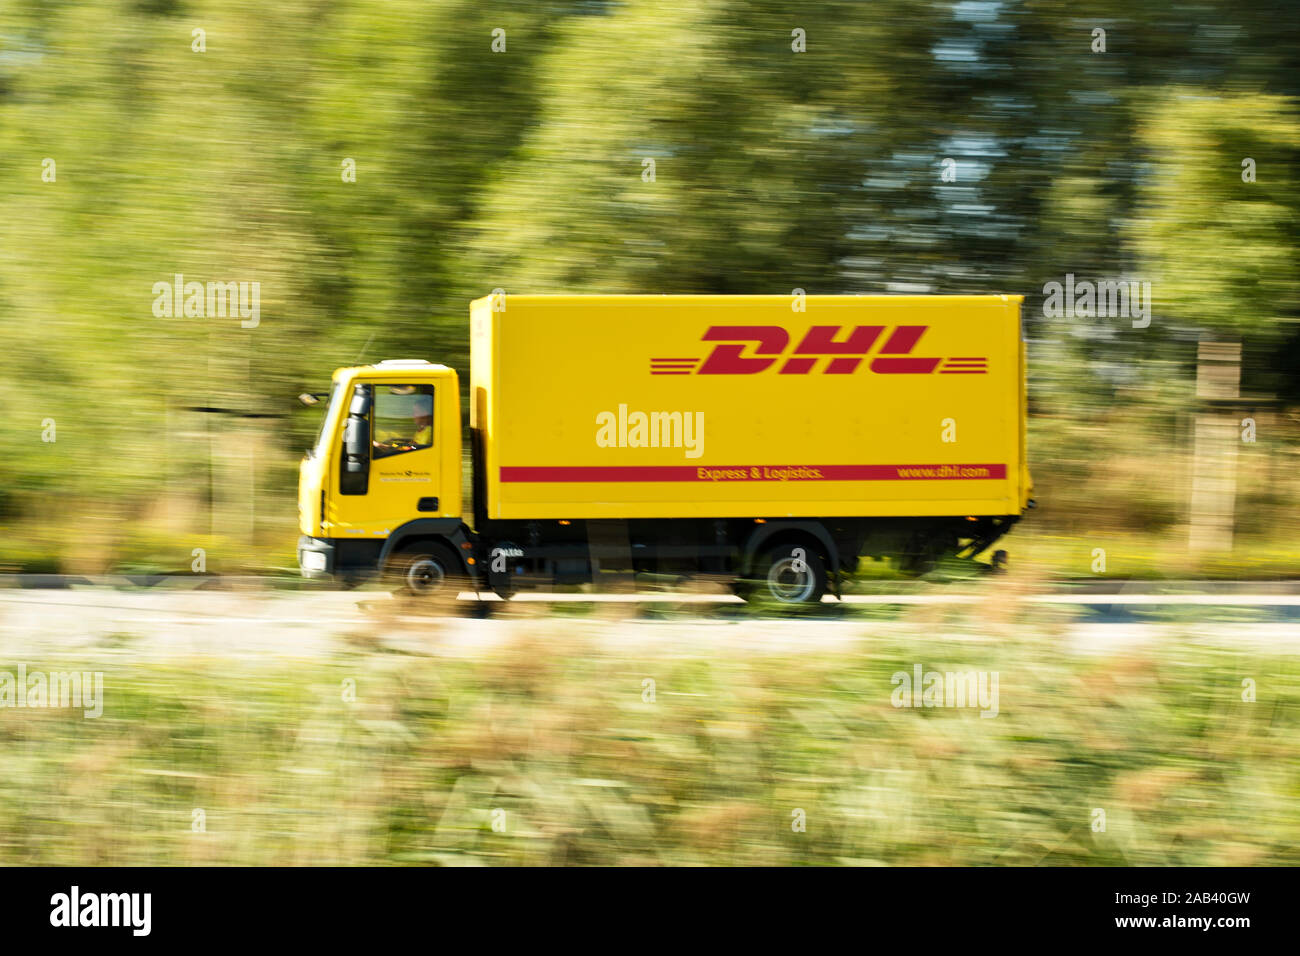 Lastkraftwagen von DHL auf dem Weg ins Logistikzentrum |DHL camion sulla strada per il centro di logistica| Foto Stock